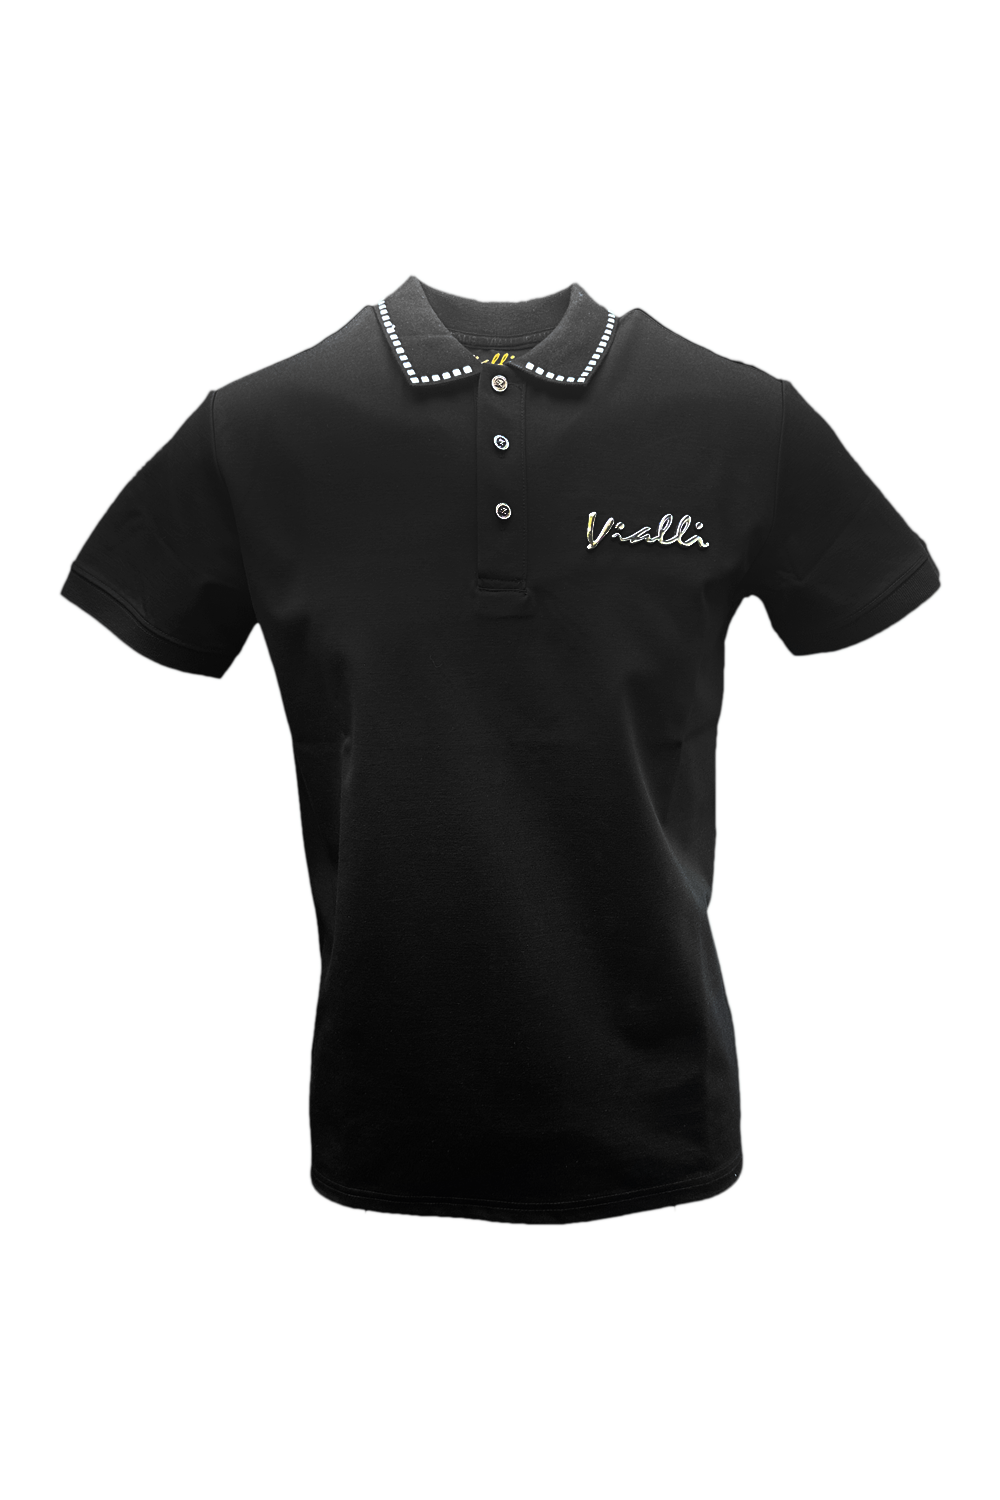 Vialli Vj23Sm11 Explax Golfer  Black